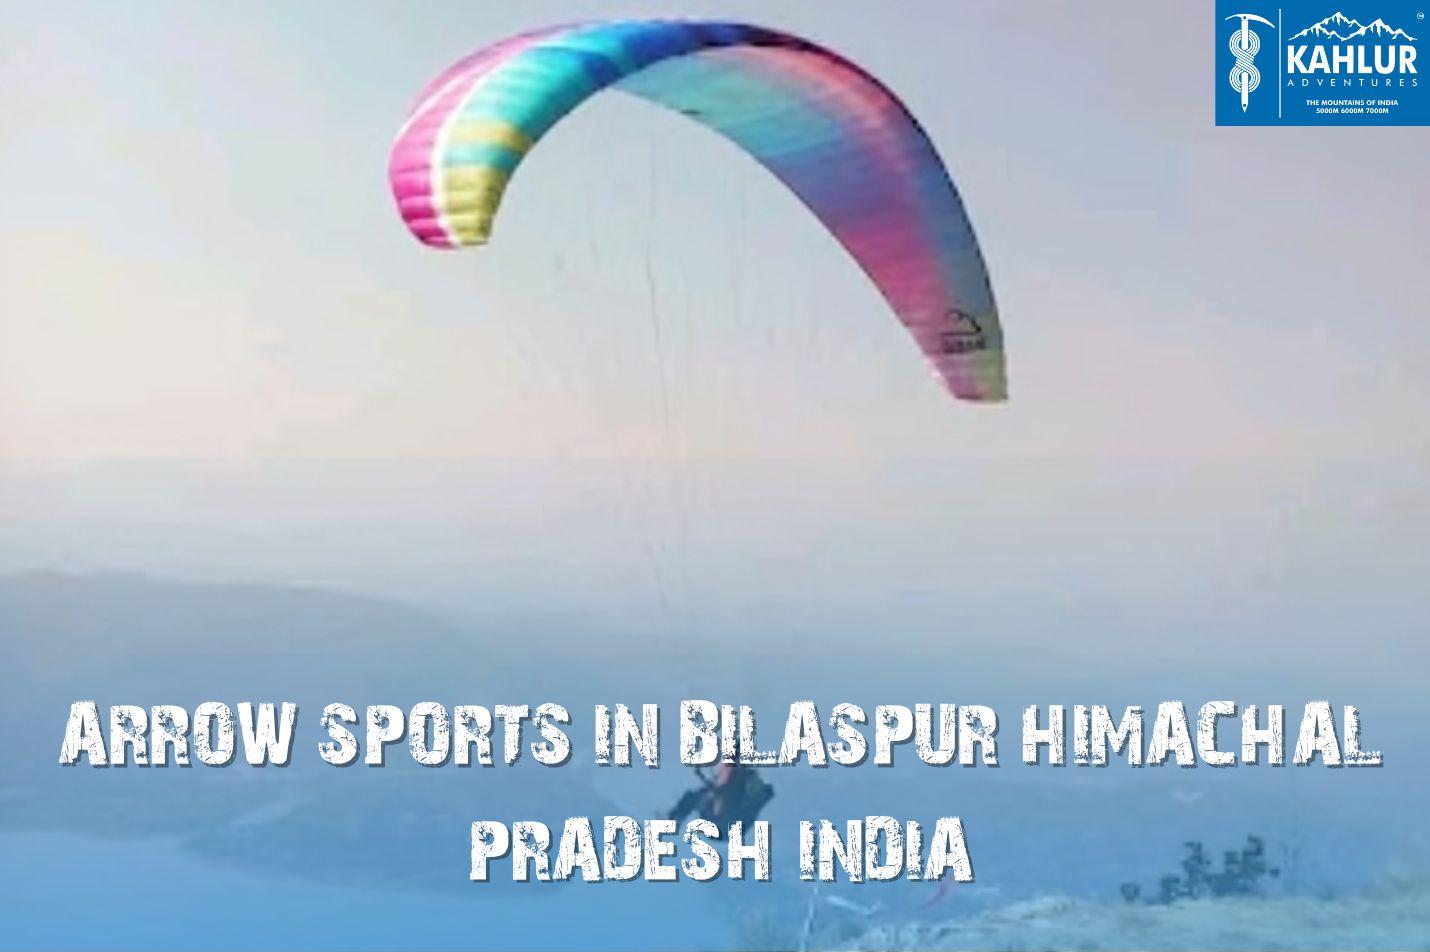 Arrow Sports in Bilaspur Himachal Pradesh India